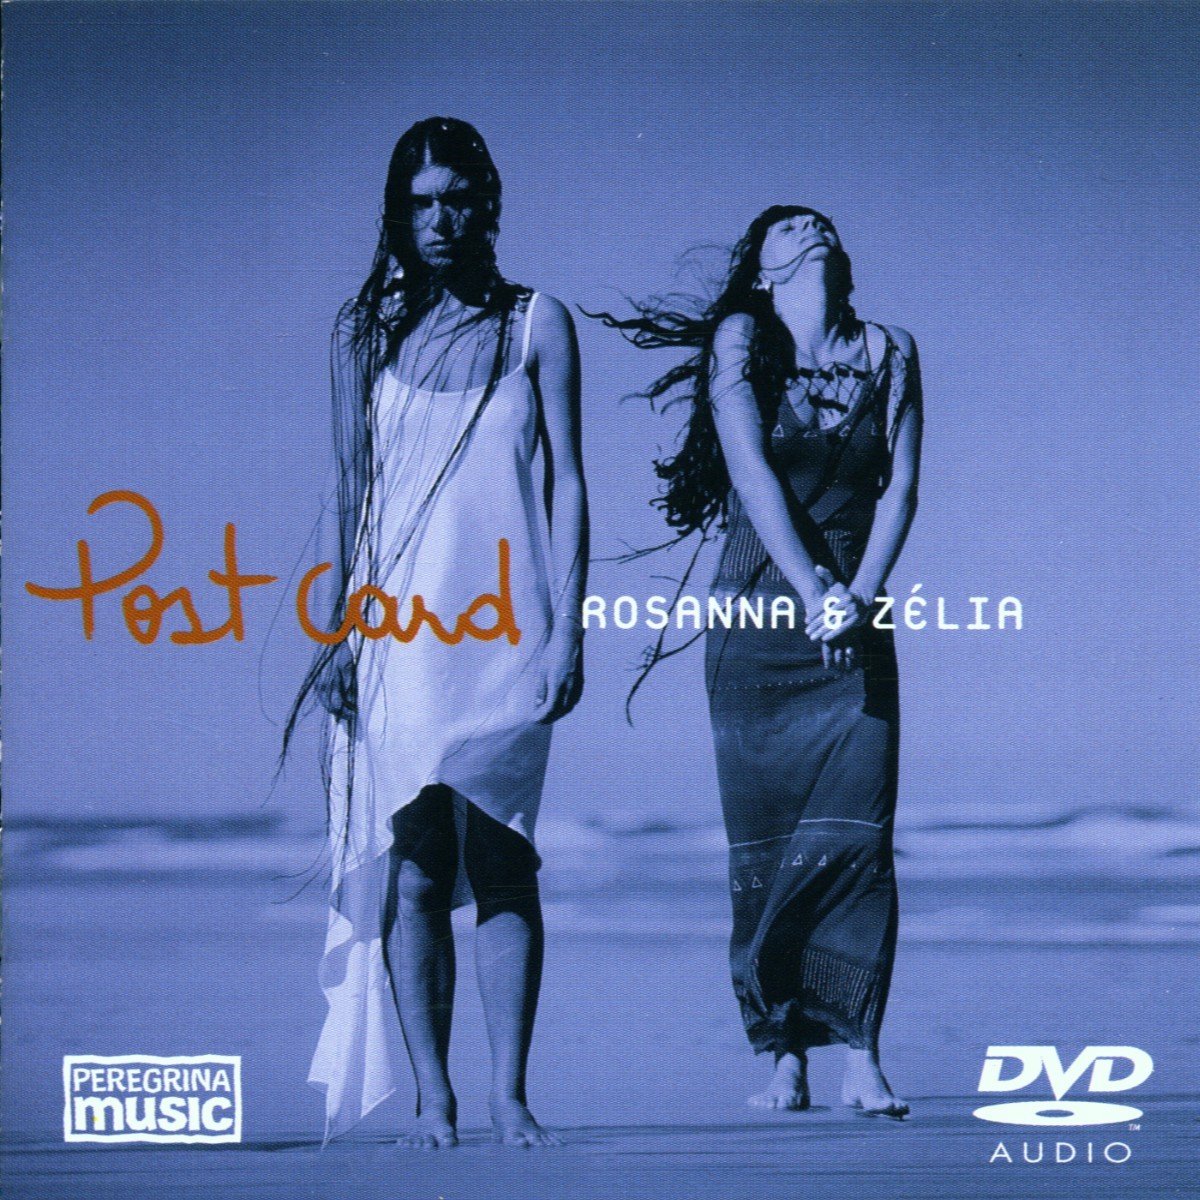 Rosanna & Zelia - Postcard (DVD)